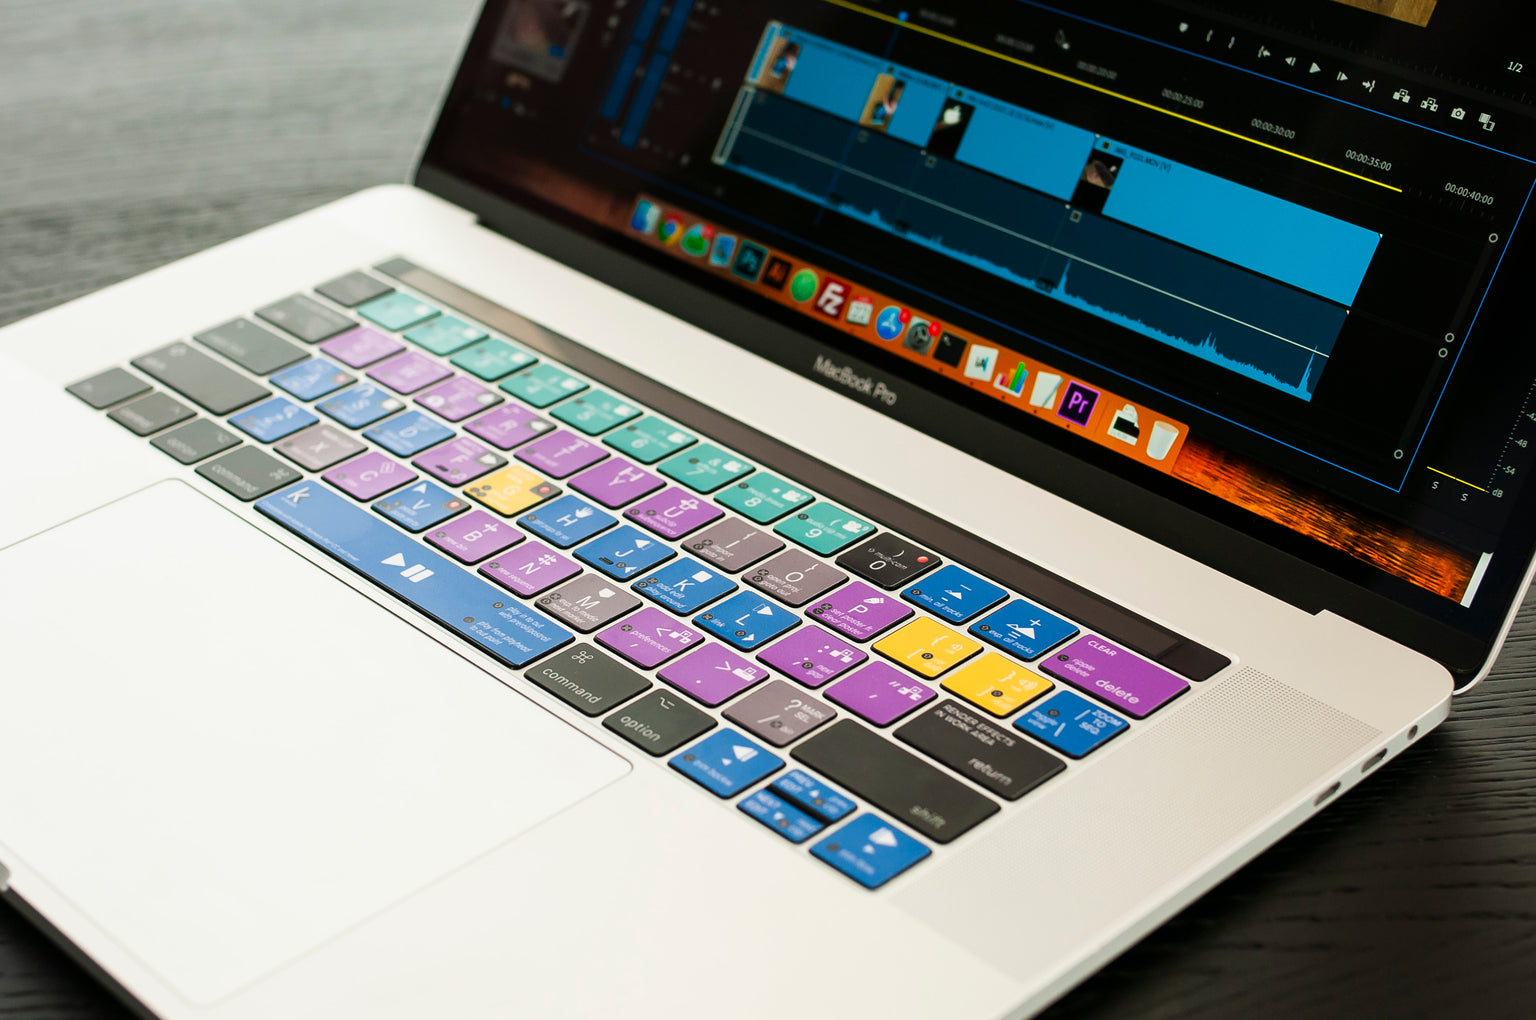 Adobe Premiere Pro shortcuts and hotkeys on keyboard stickers